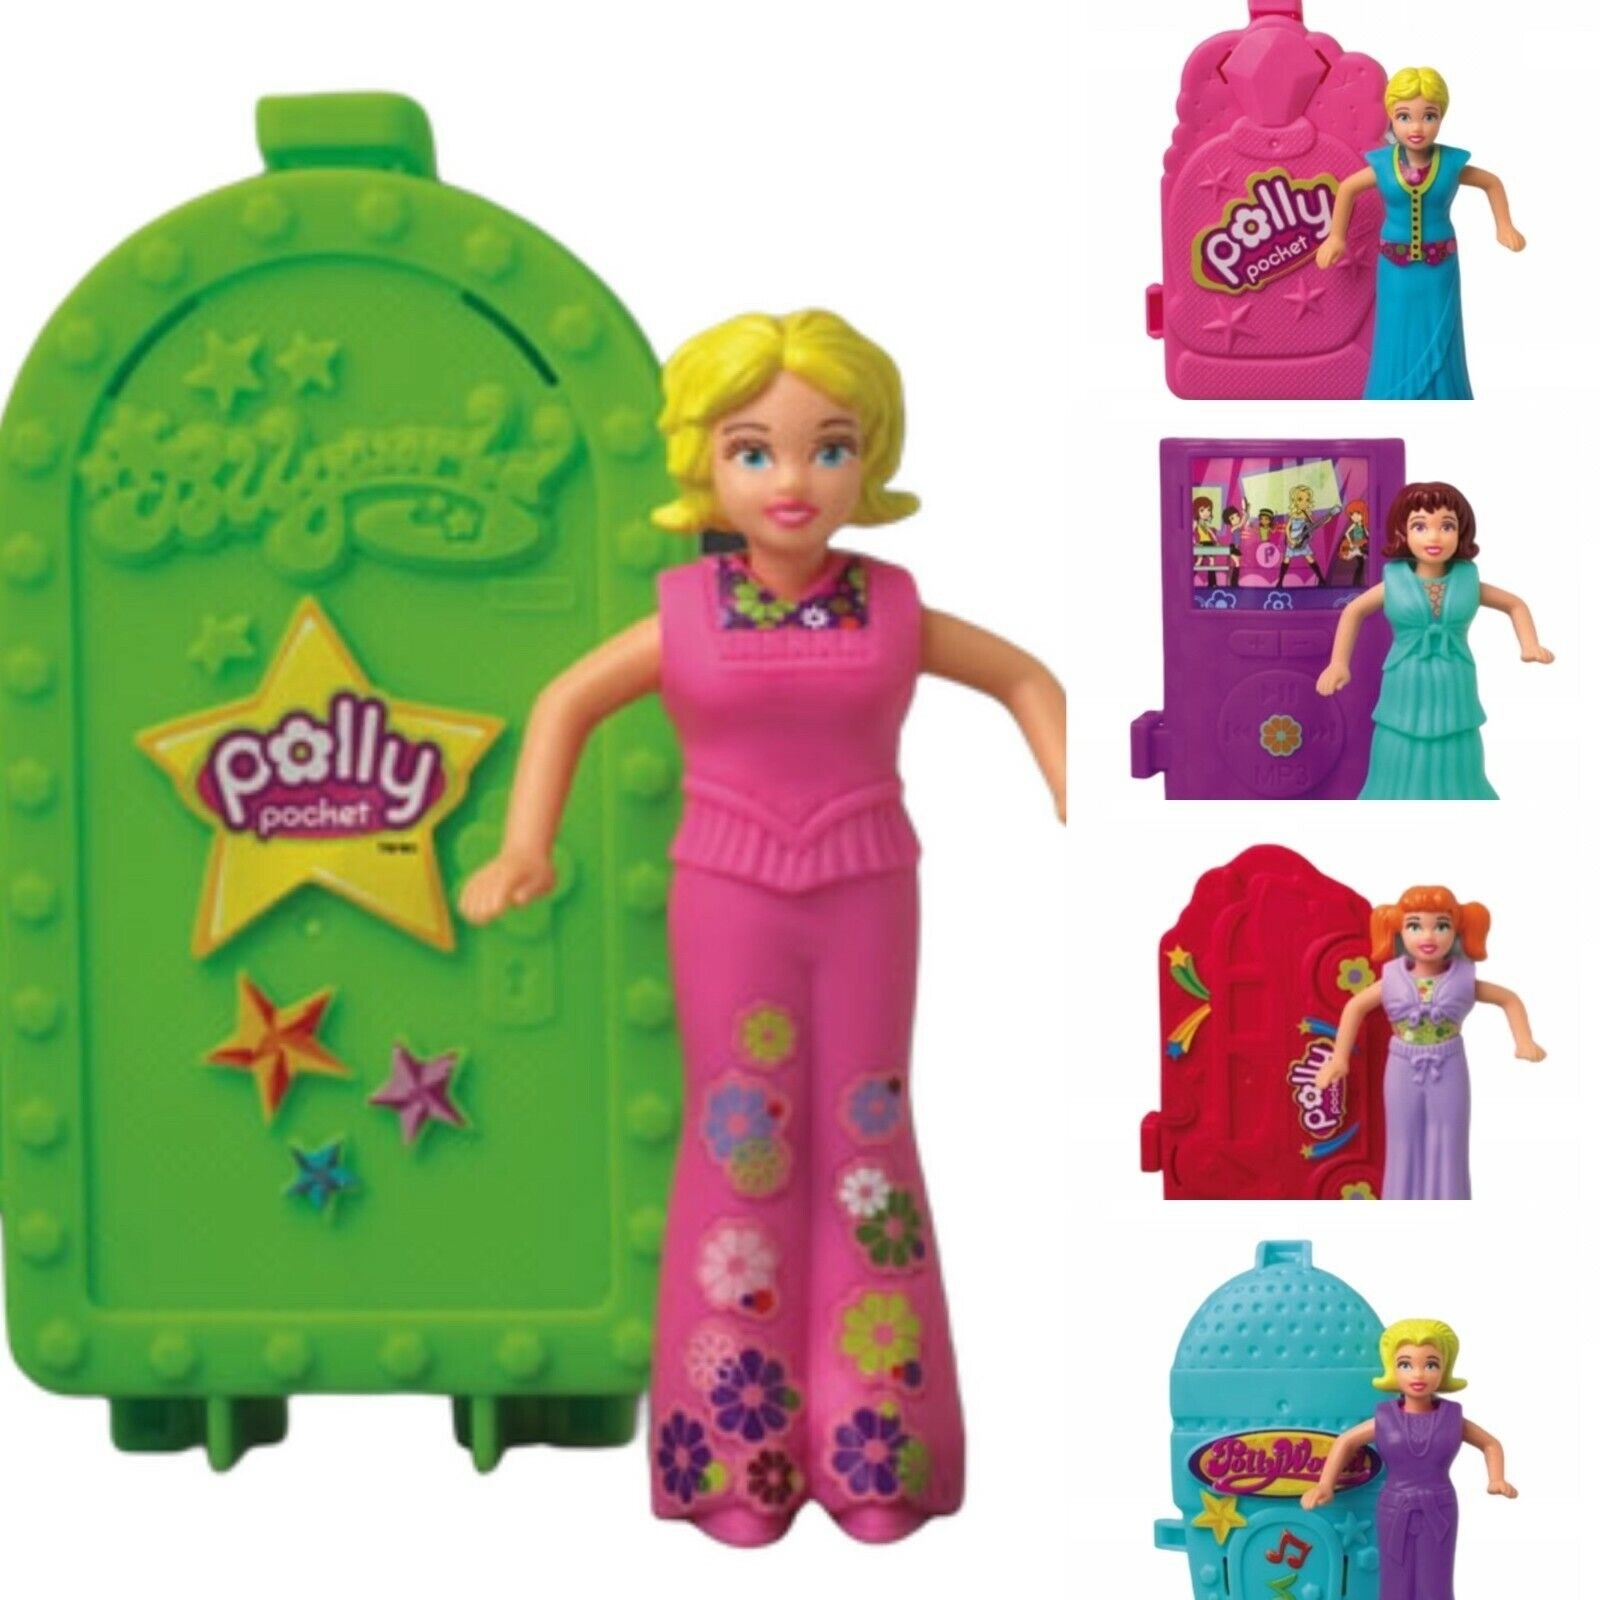 2004 Happy Meal Polly Pocket toys, depicting a Polly Pocket